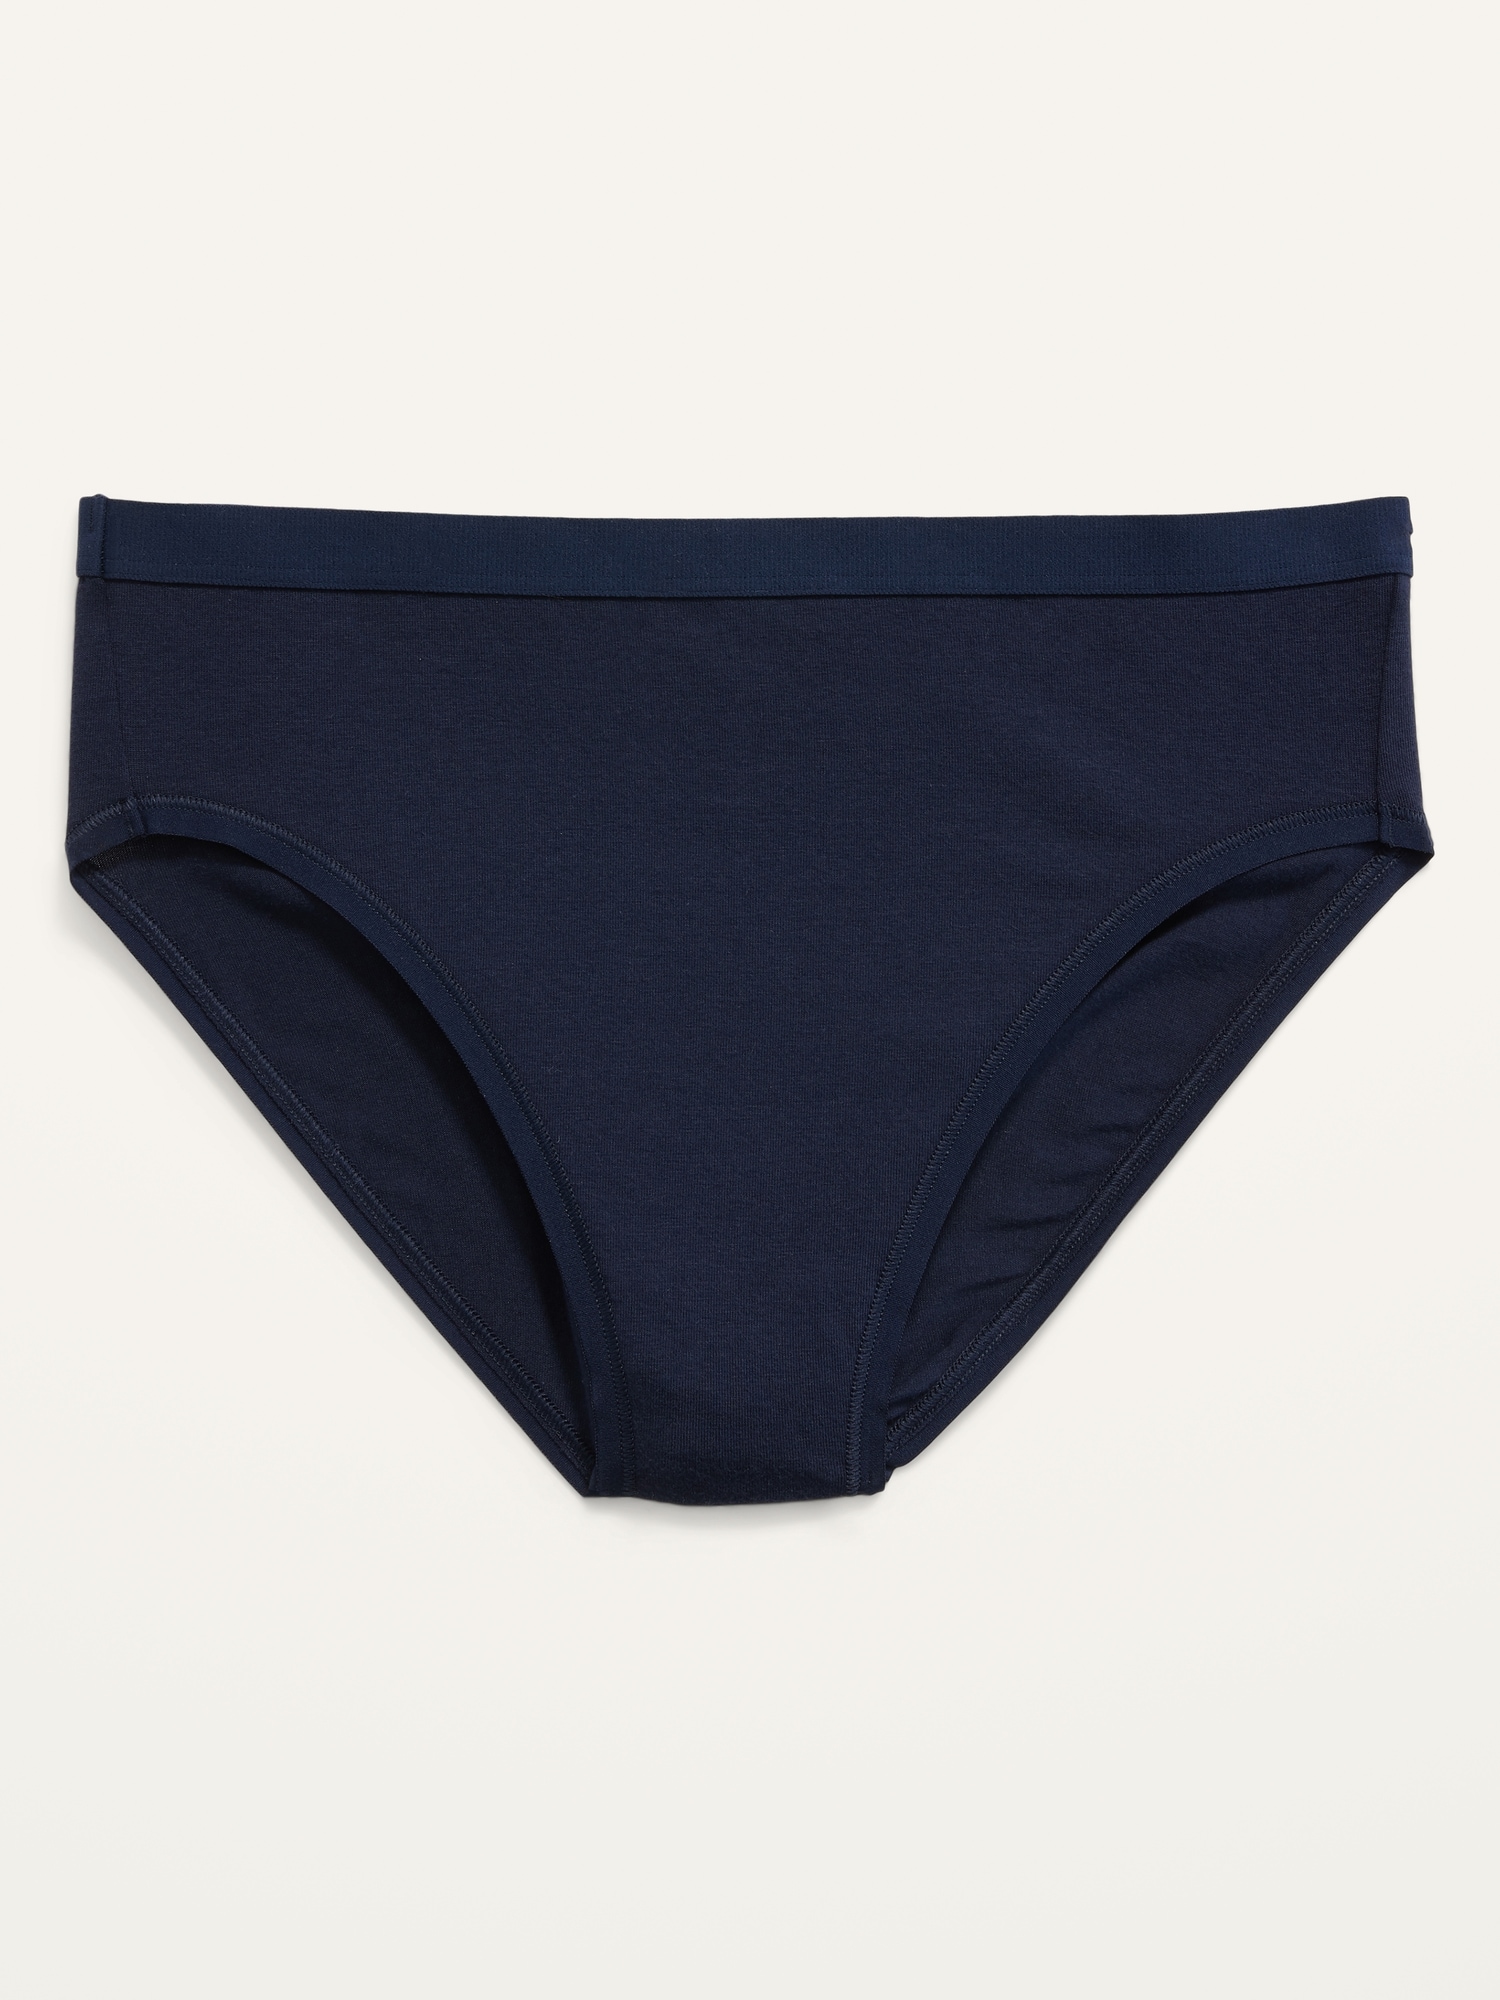 Dress Blue - Pima Cotton – Nth Degree Underwear